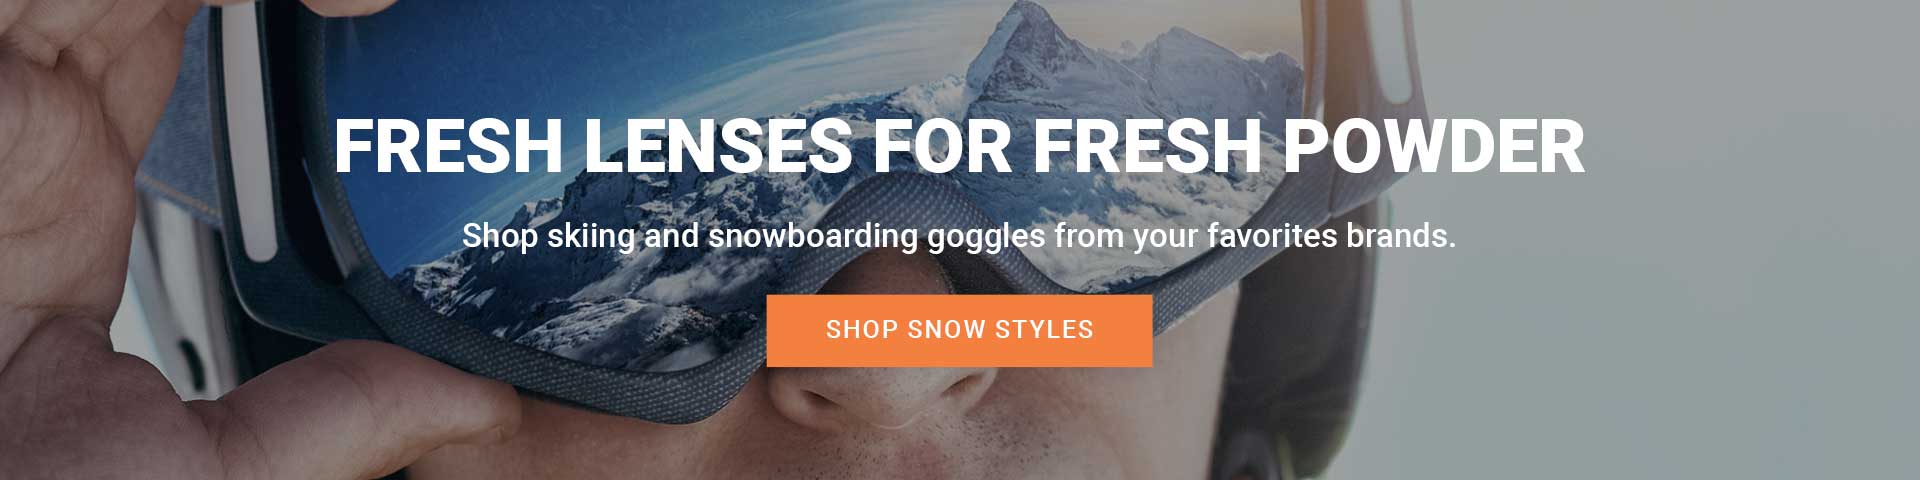 Shop ski goggles now